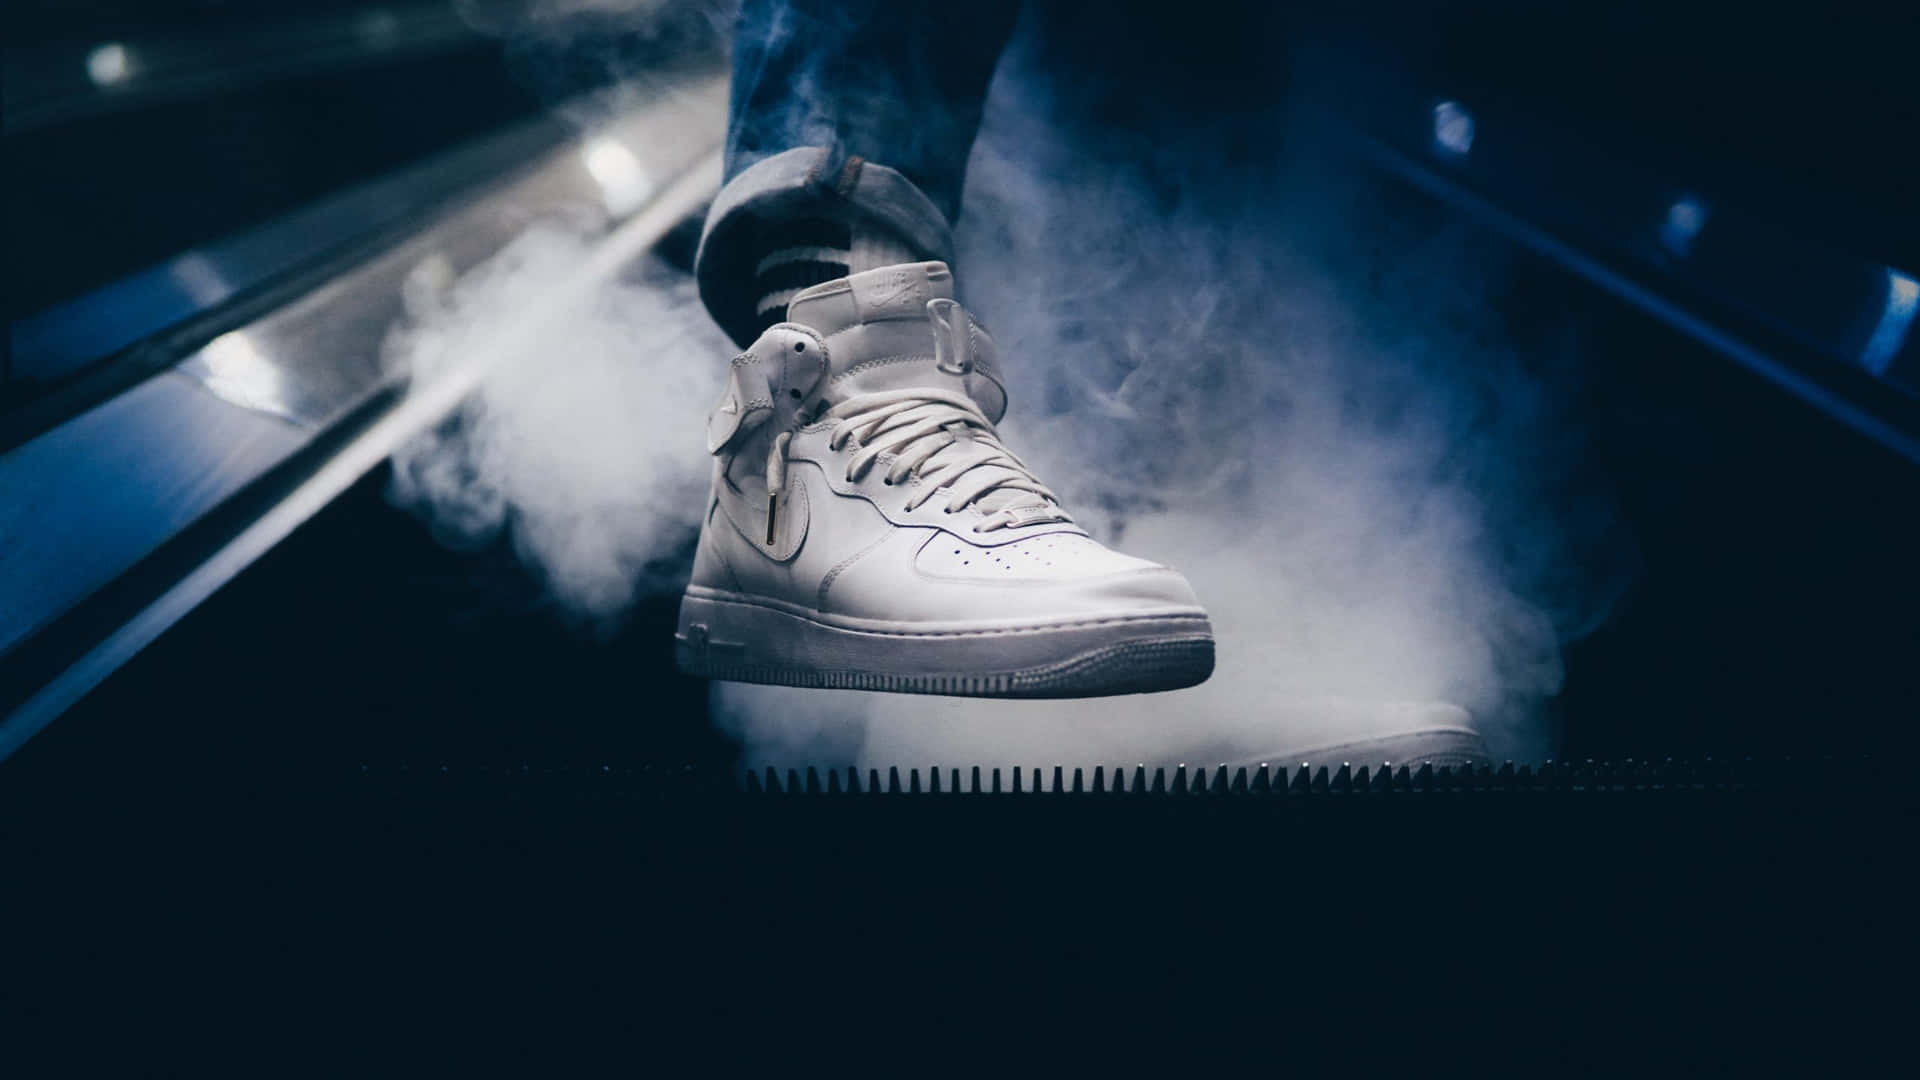 Airforce Sneakerhead - Aficionado De Zapatillas Air Force. Fondo de pantalla